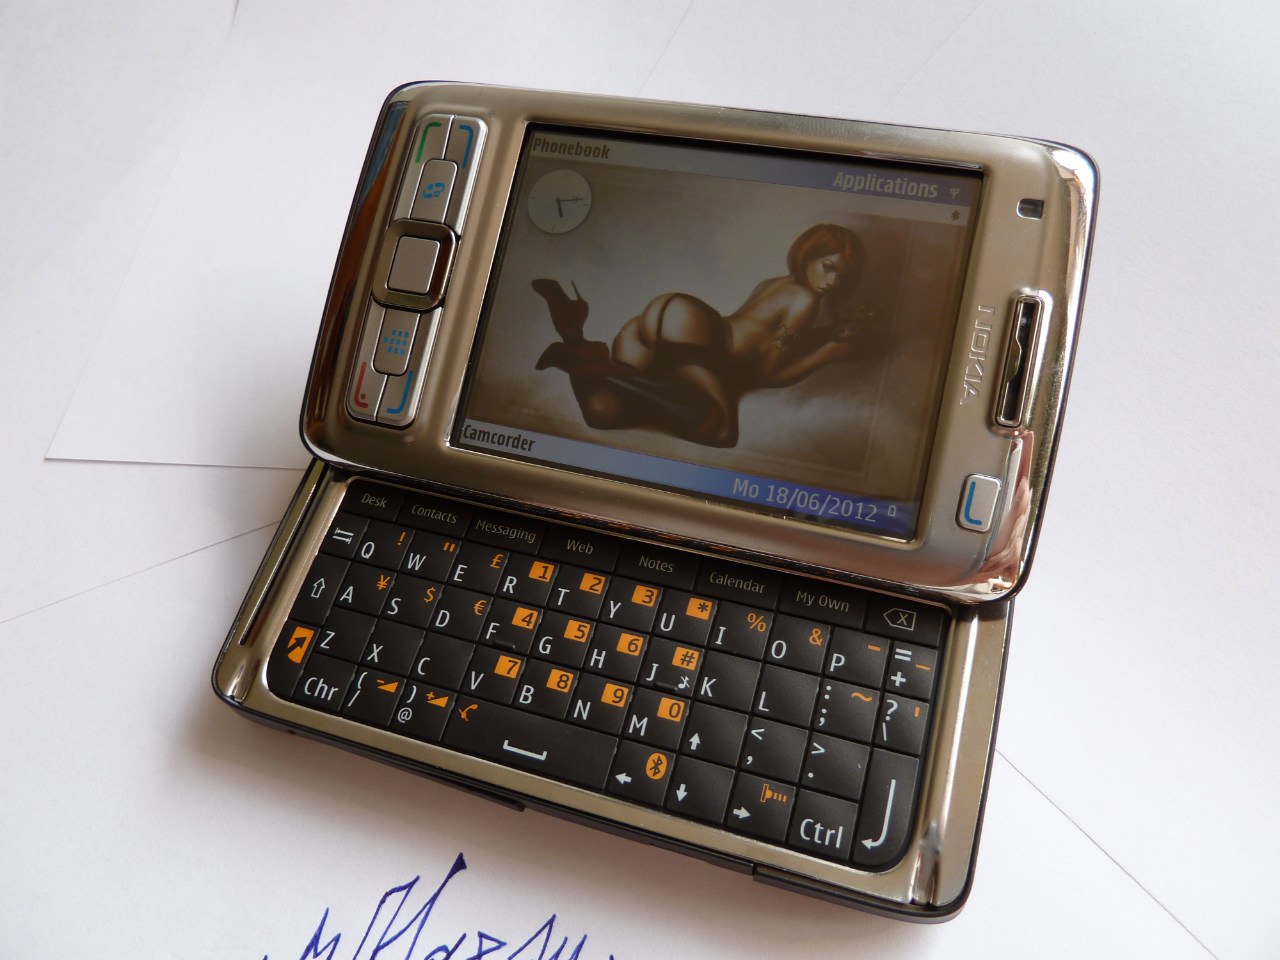 Nokia E80